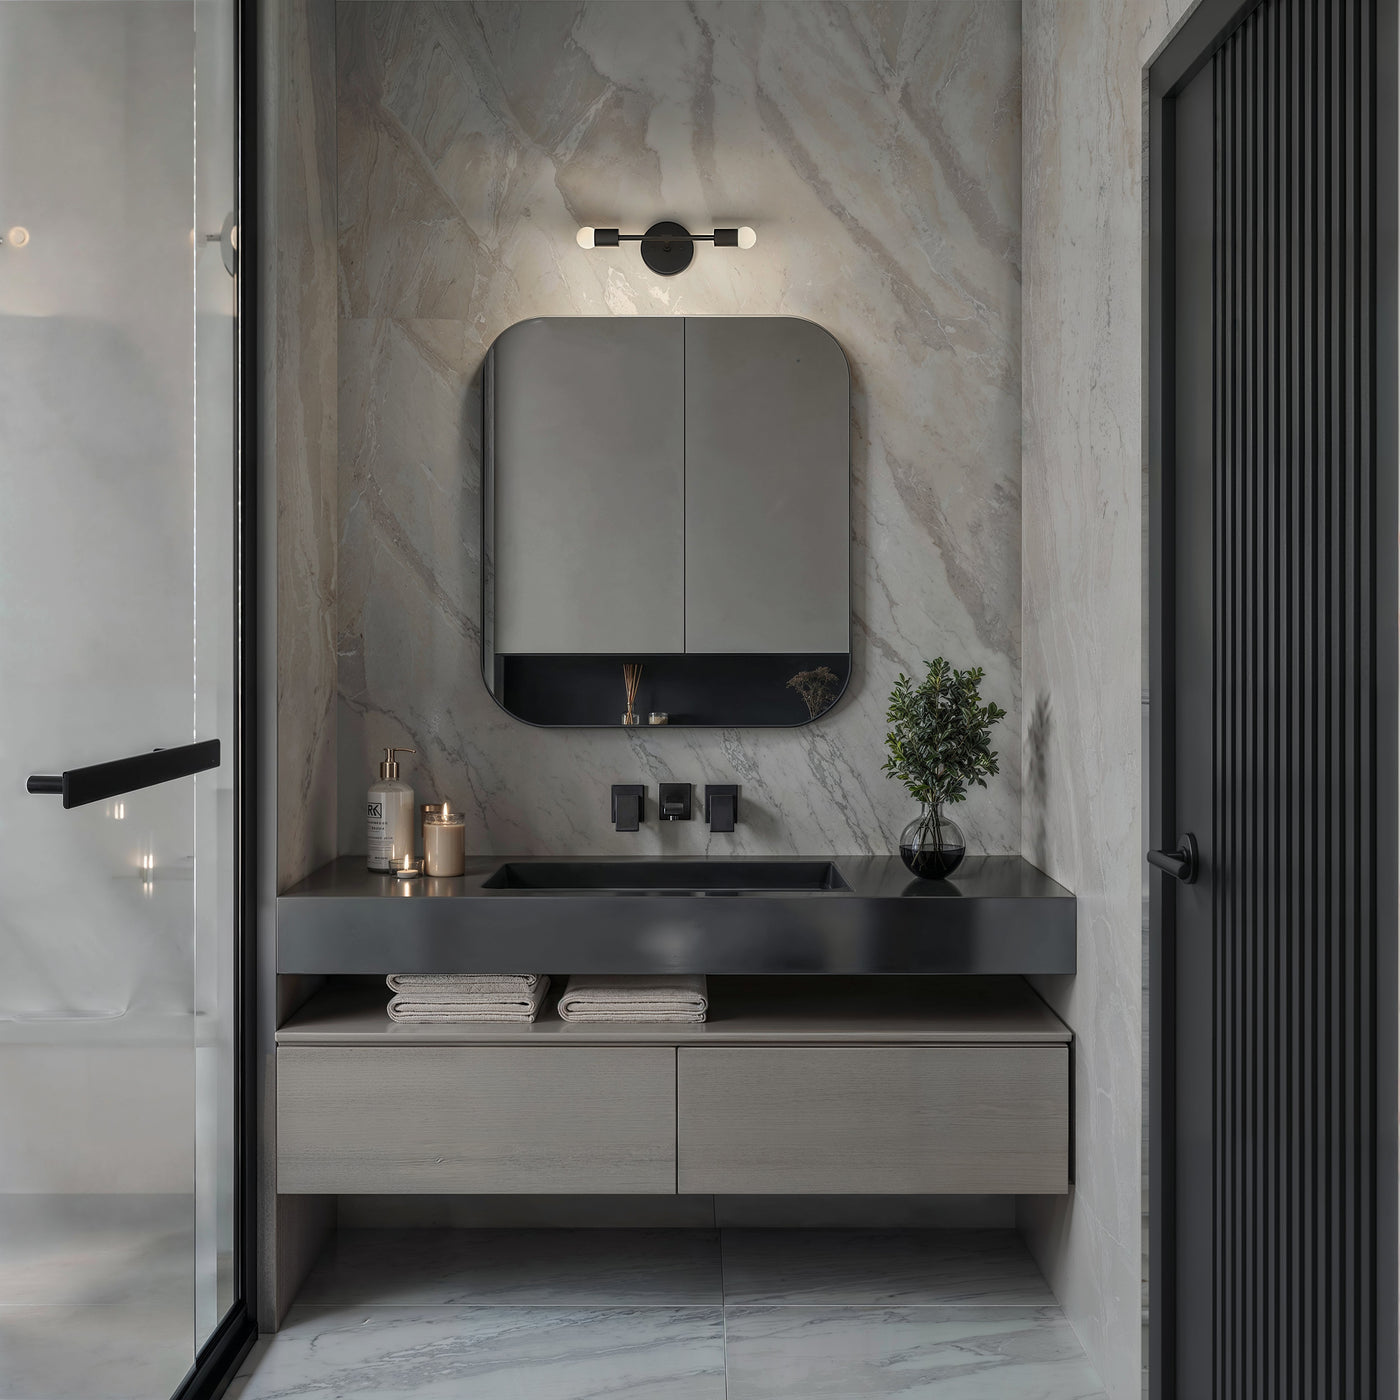 Artesia - Two Light Bathroom Sconce Vanity